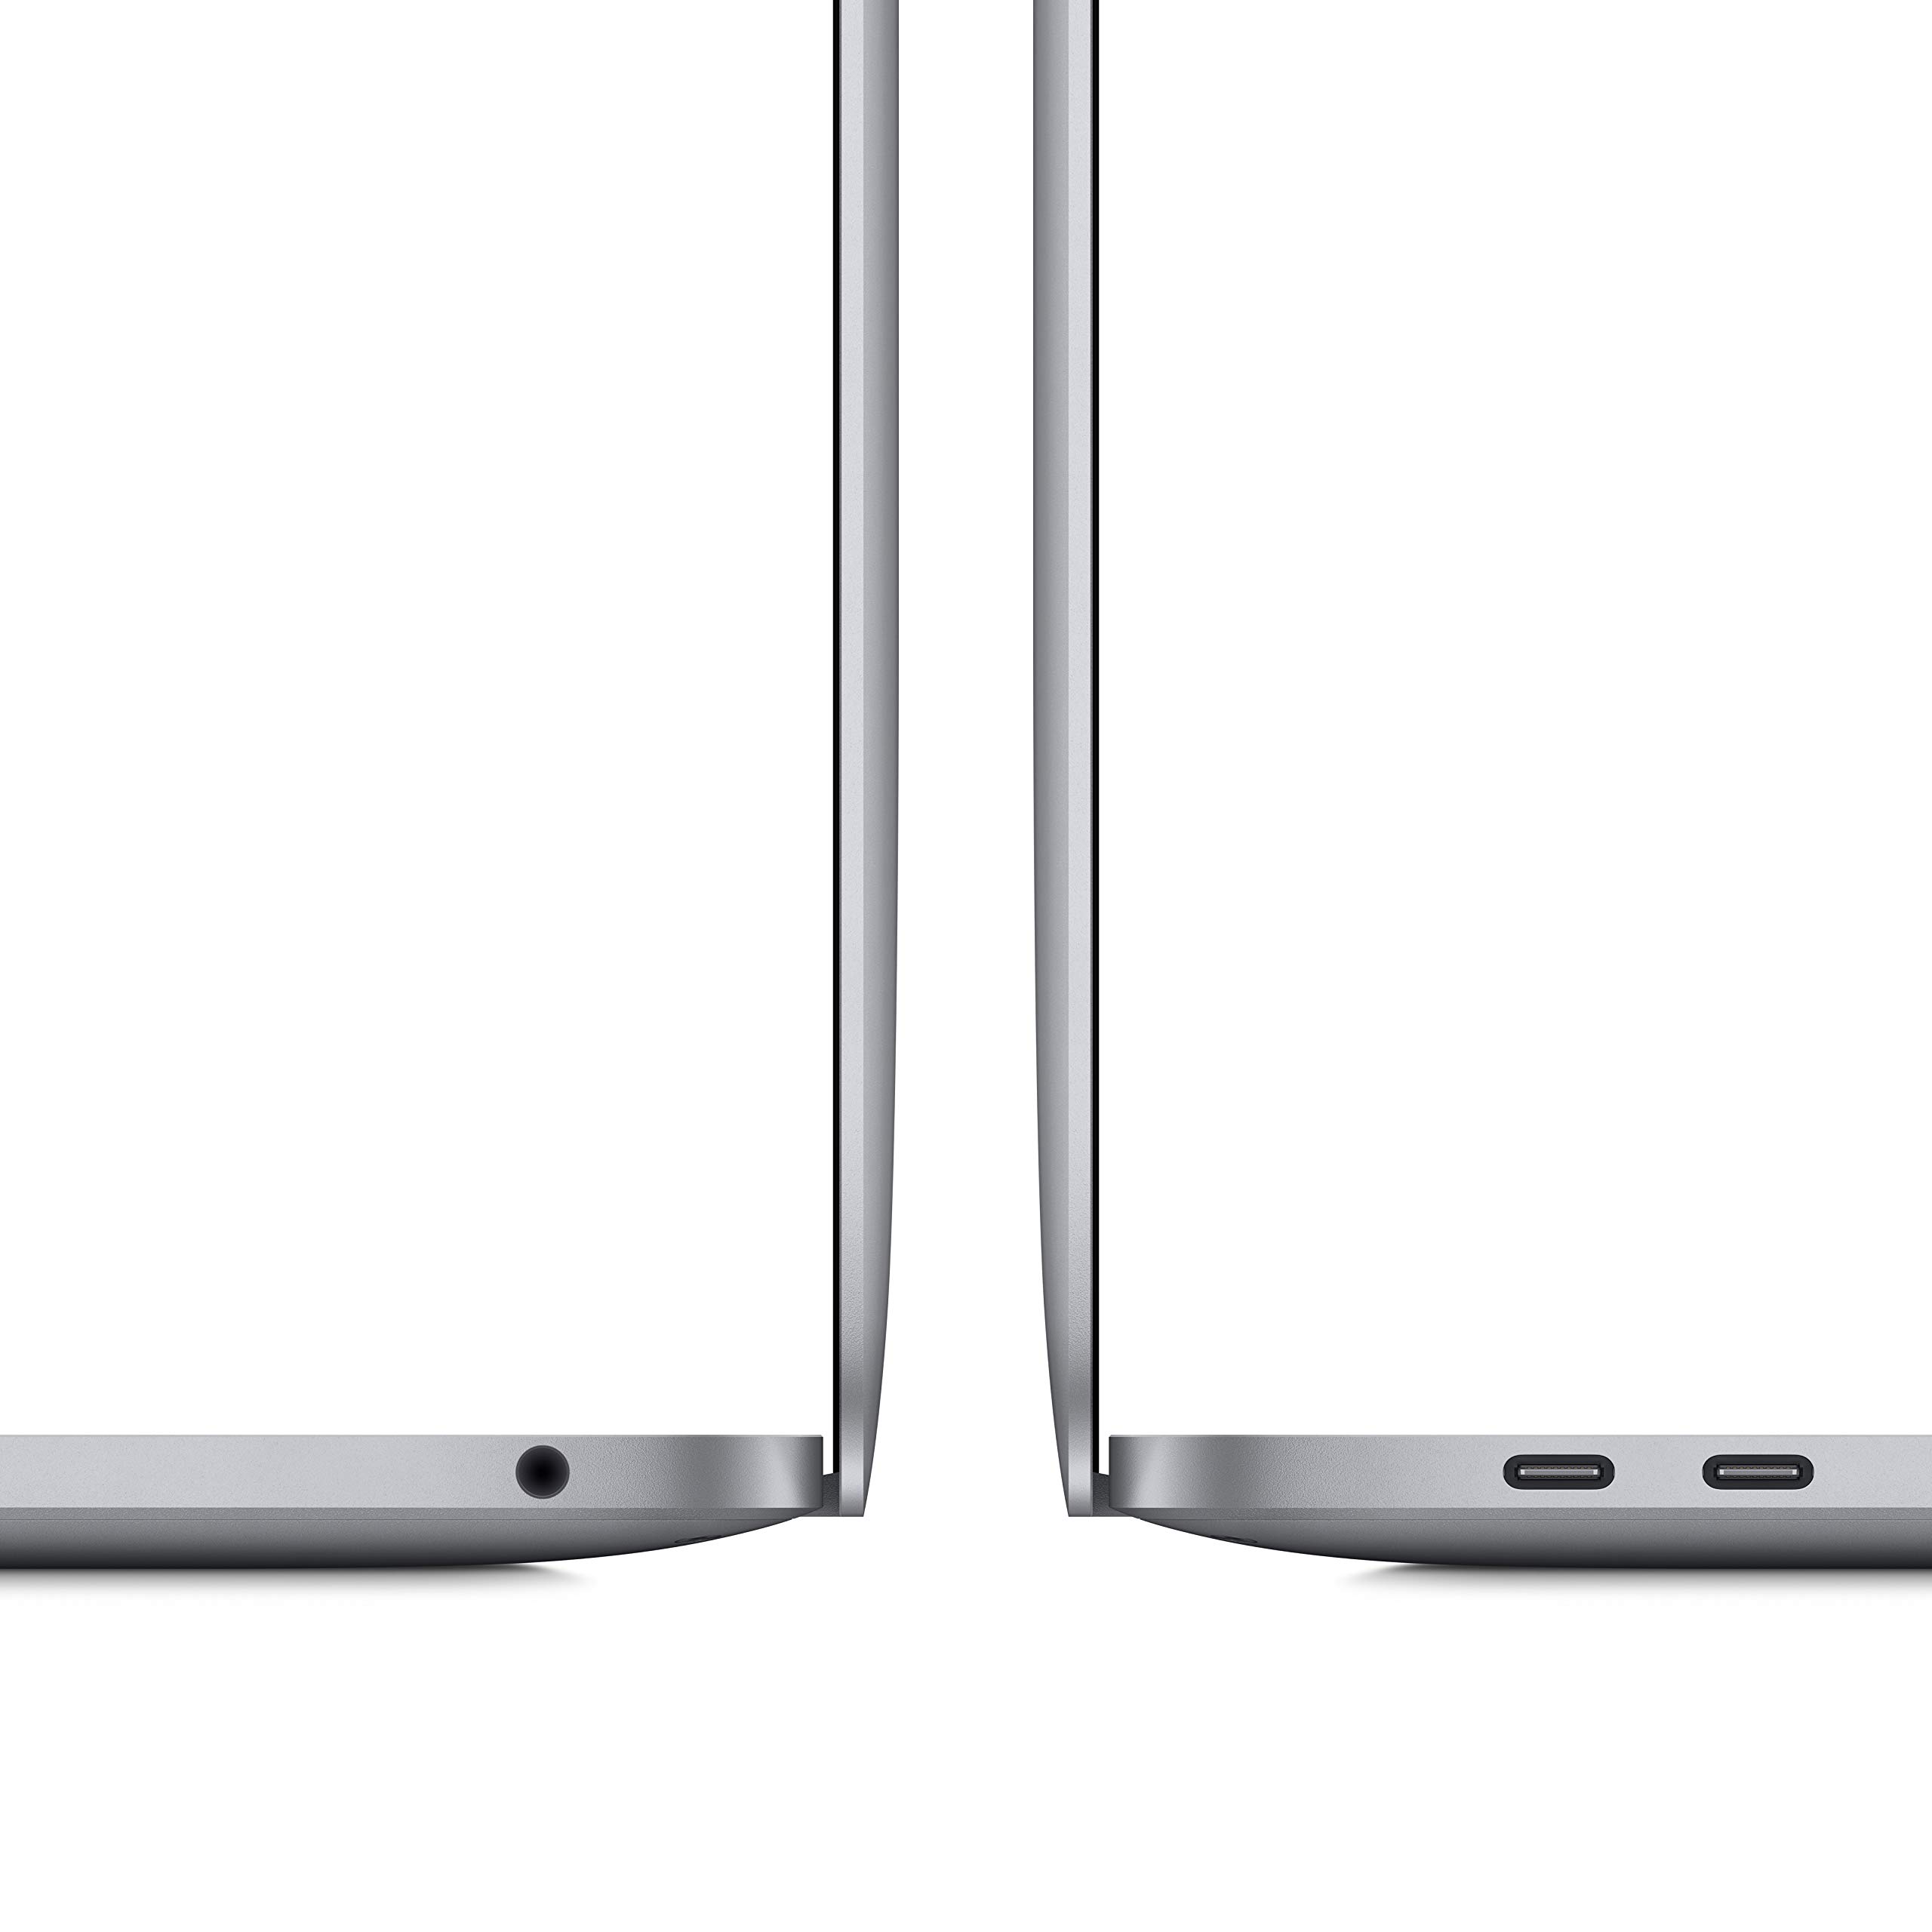 Apple 2020 MacBook Pro M1 Chip (13-inch, 8GB RAM, 256GB SSD Storage) - Space Gray